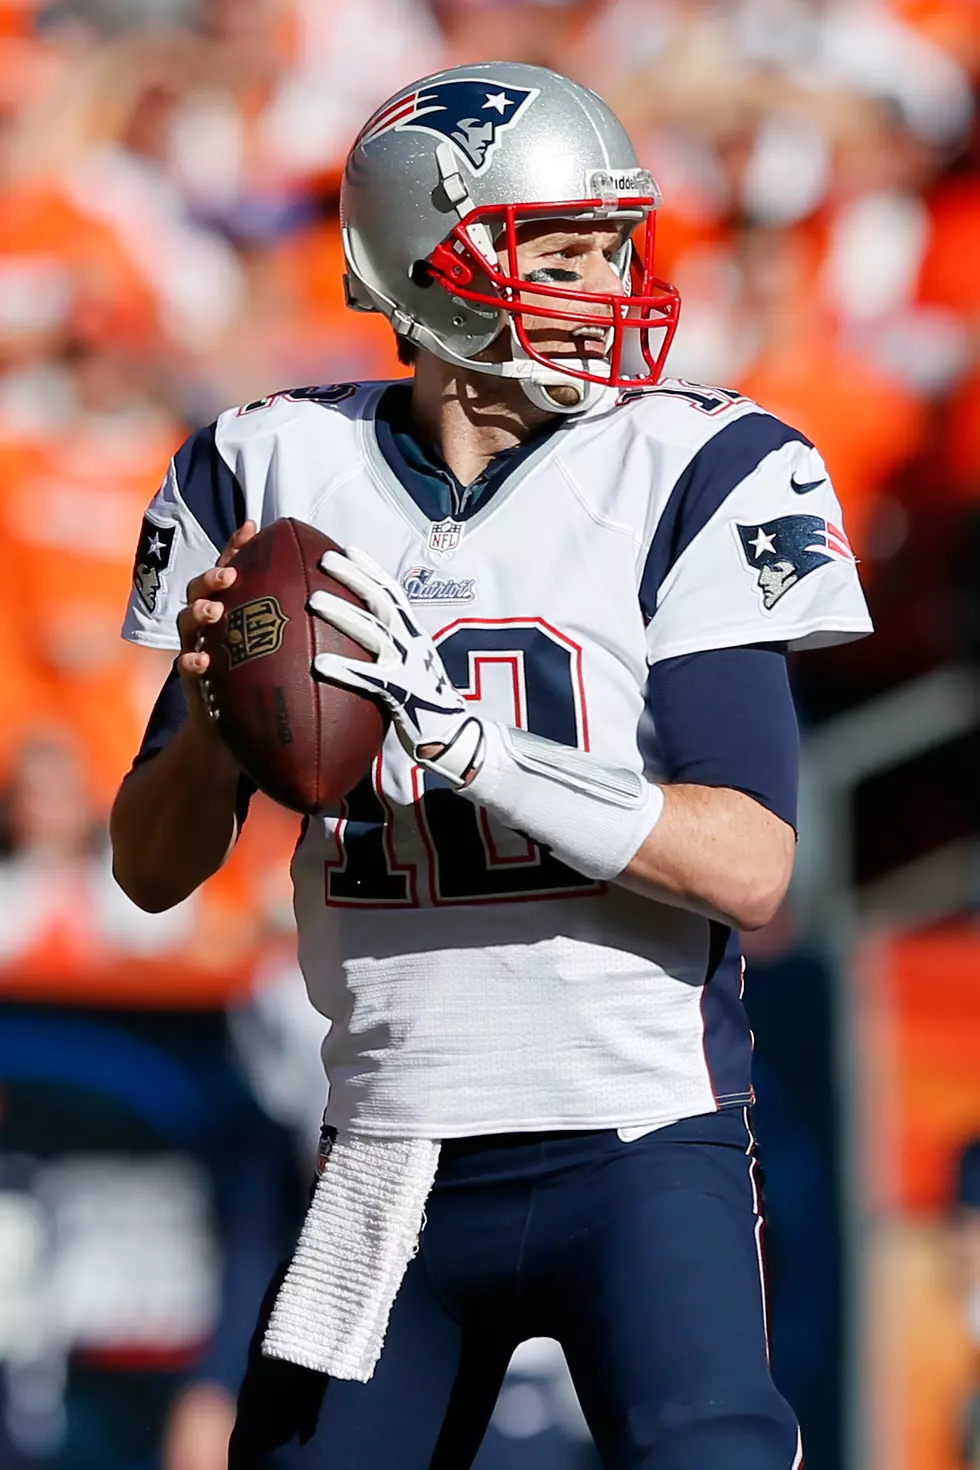 Brady Wants to Keep Playing